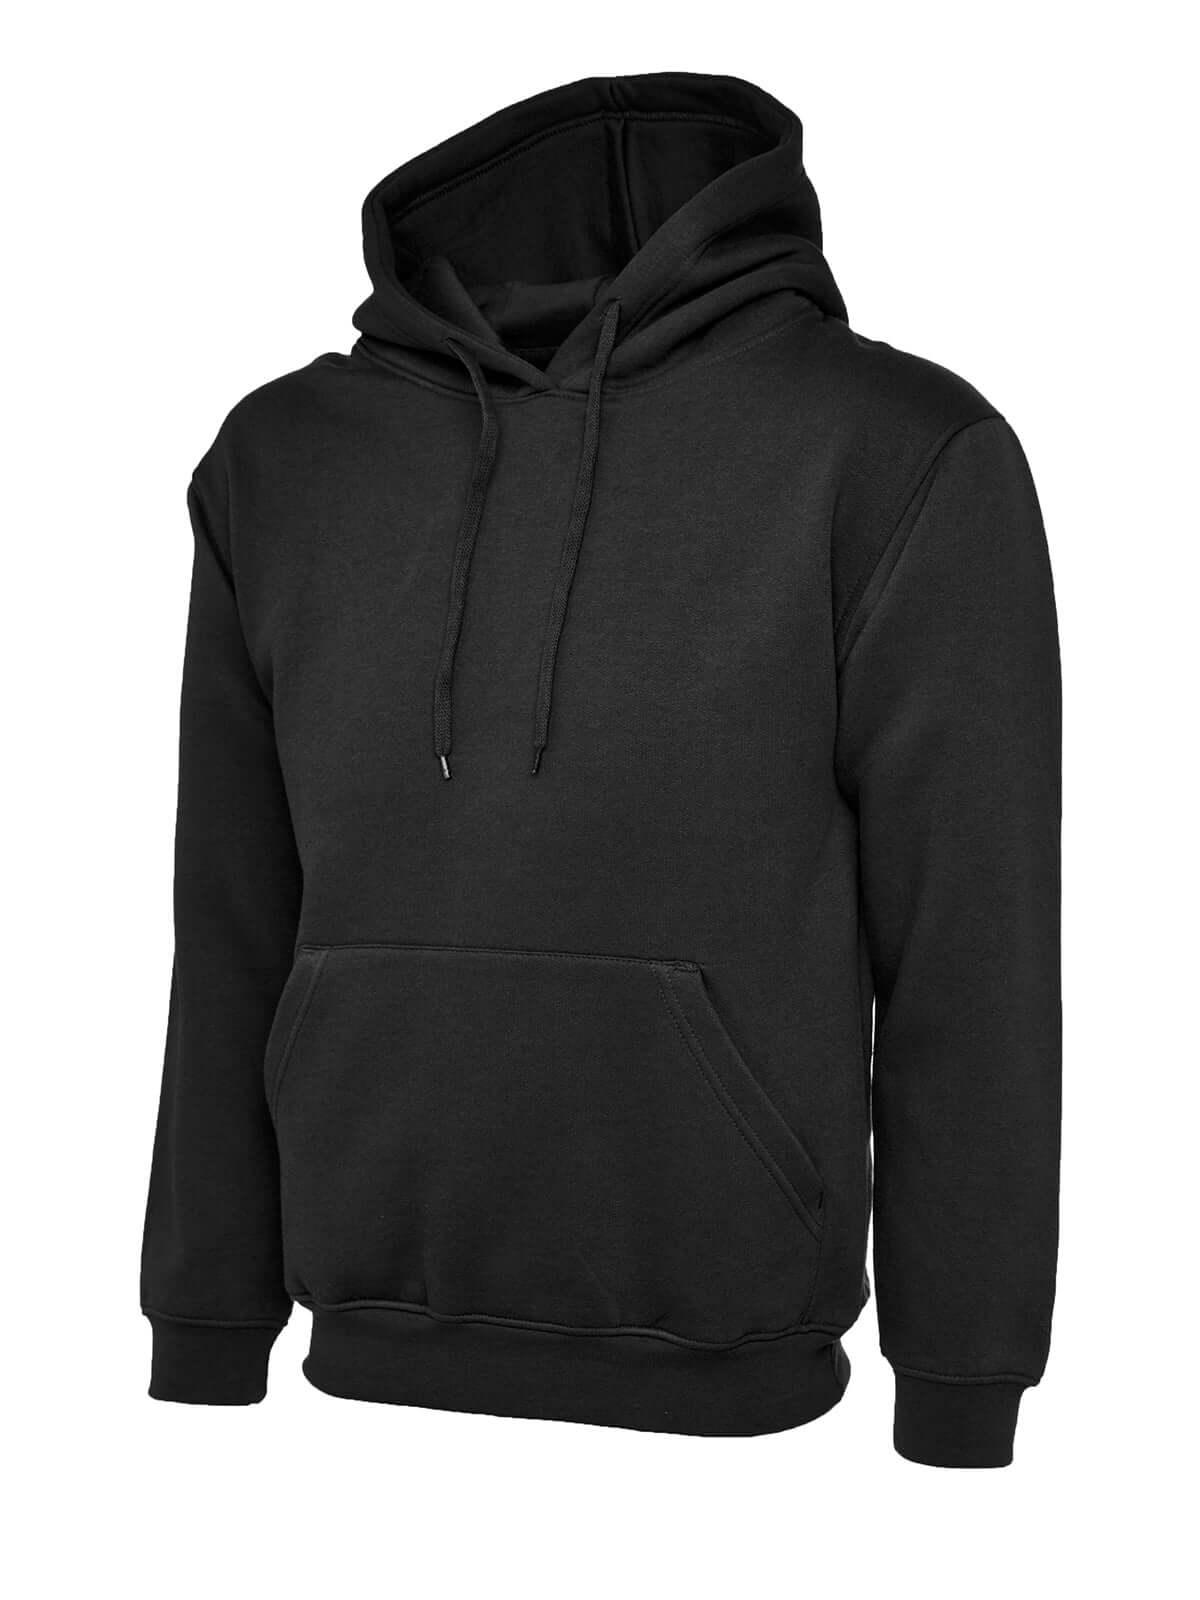 Pegasus Uniform Premium Hooded Sweatshirt - Black